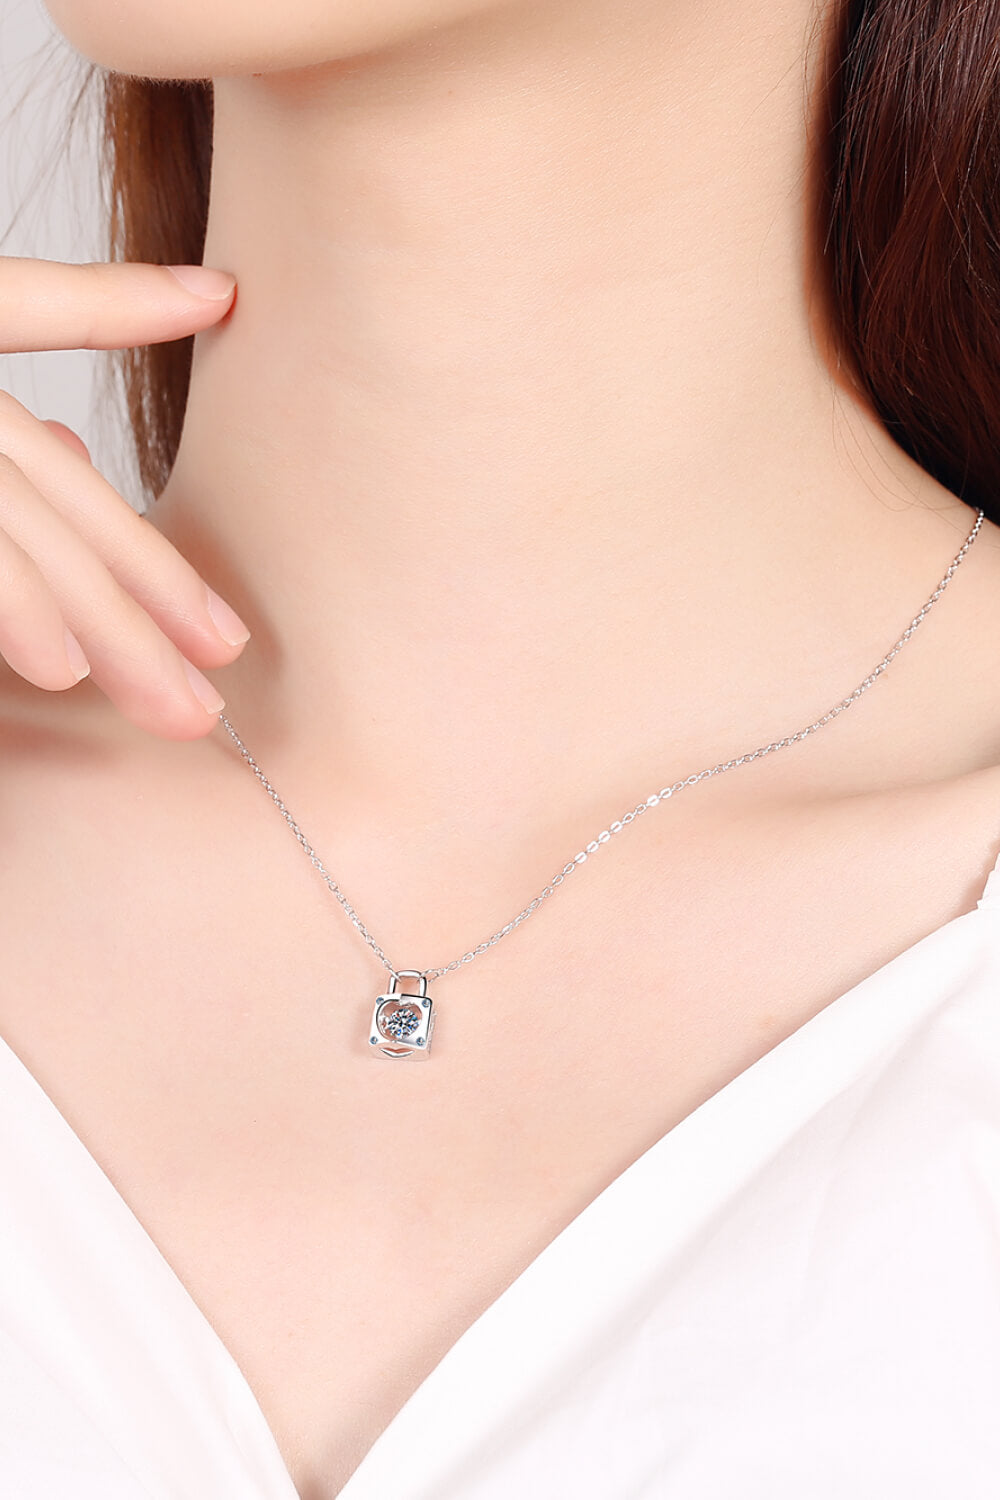 Heart-Shaped-Lock - Moissanite Pendant Necklace